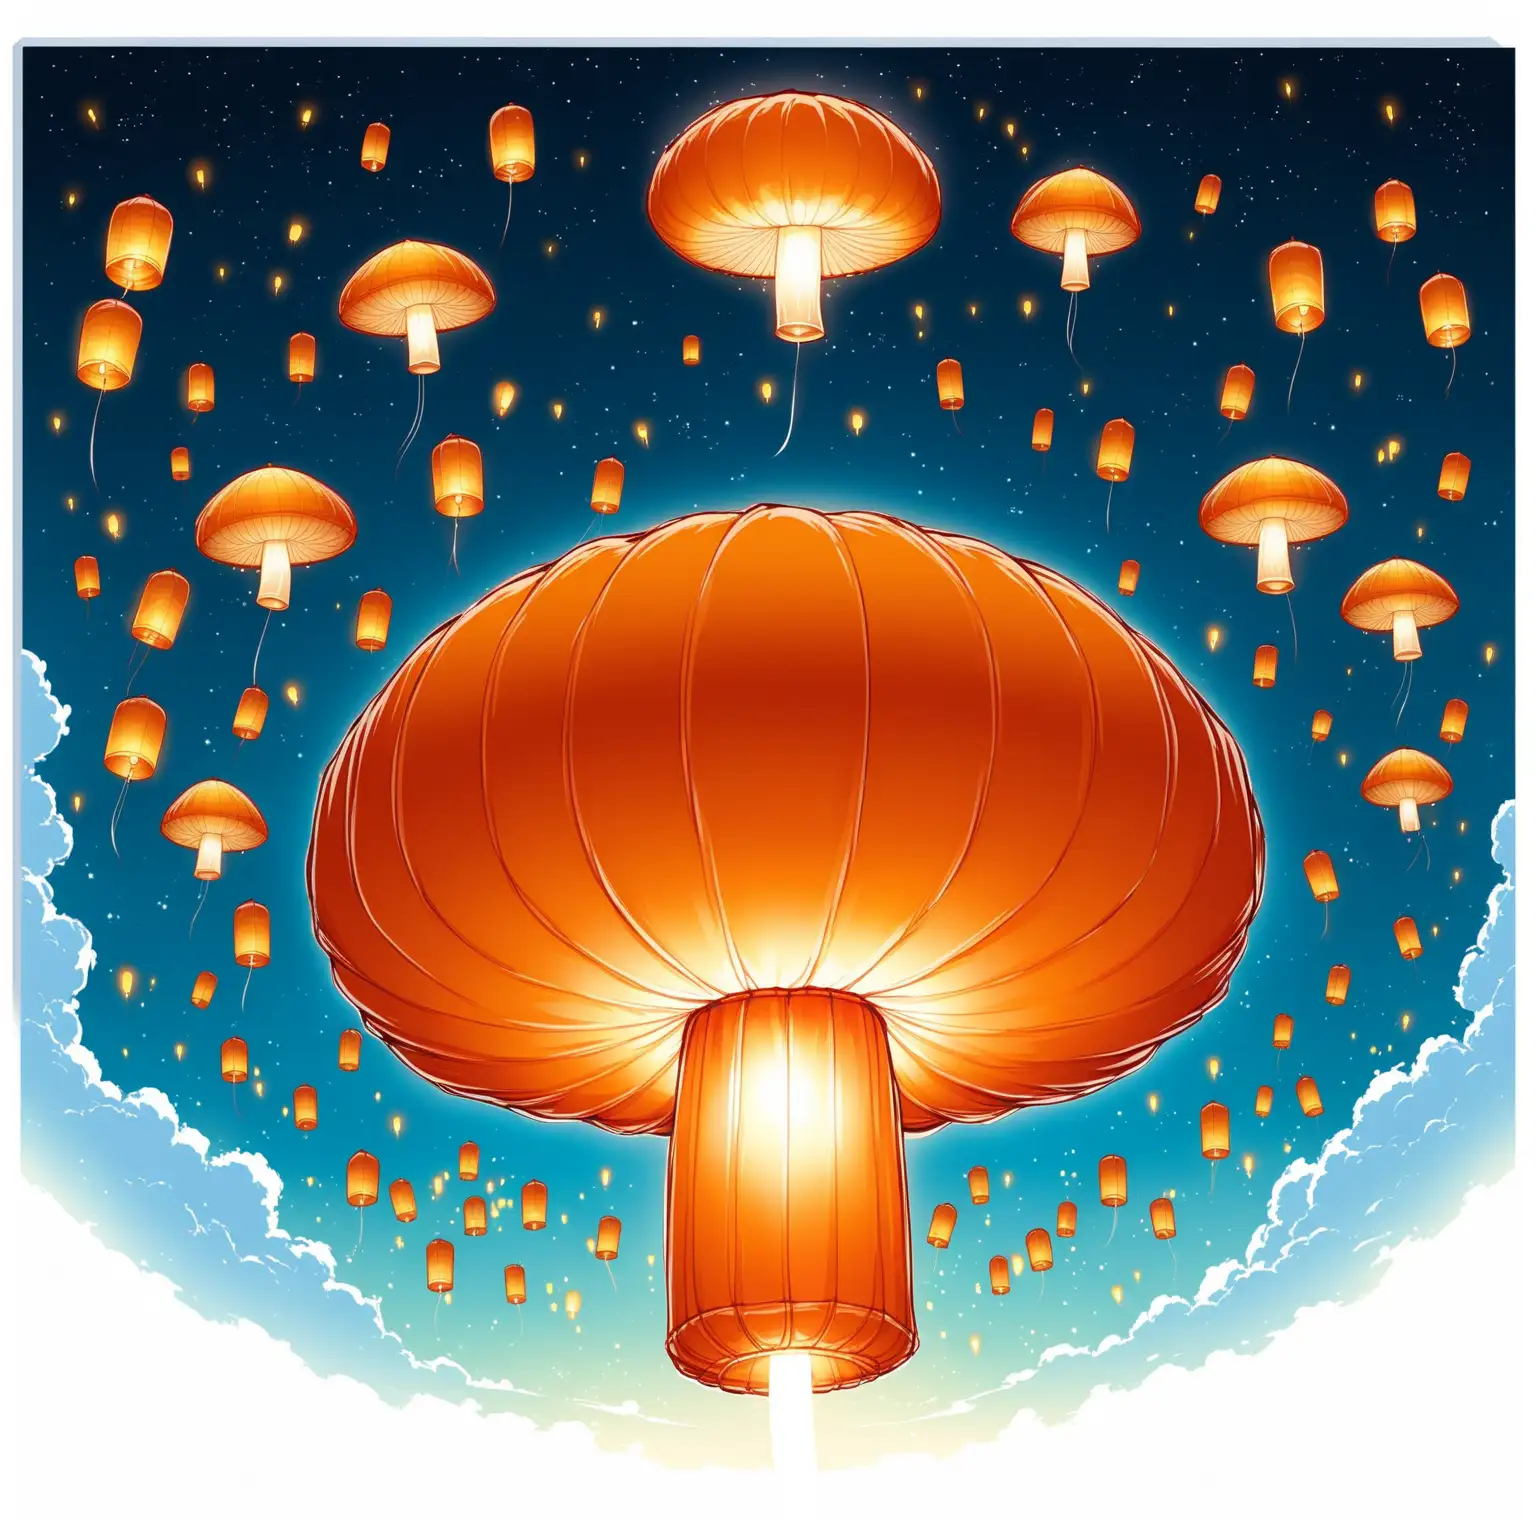 Nuclear-Mushroom-Sky-Lanterns-Illuminating-the-Night-with-Eerie-Beauty